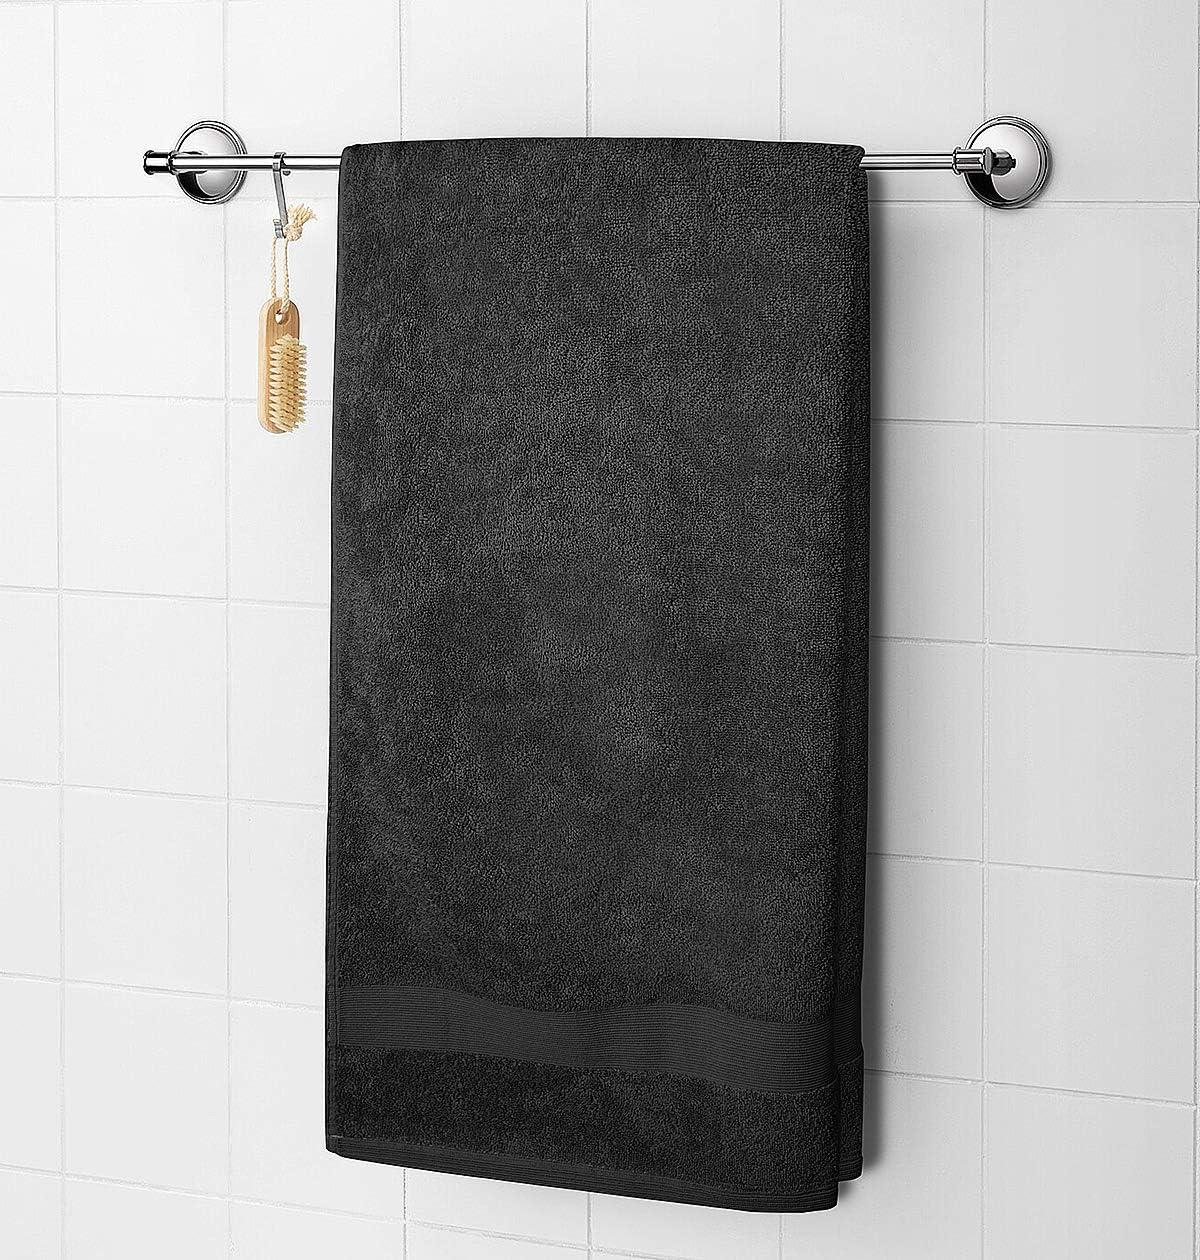 Softolle 100% Cotton Luxury Bath Towels - 600 GSM Cotton Towels